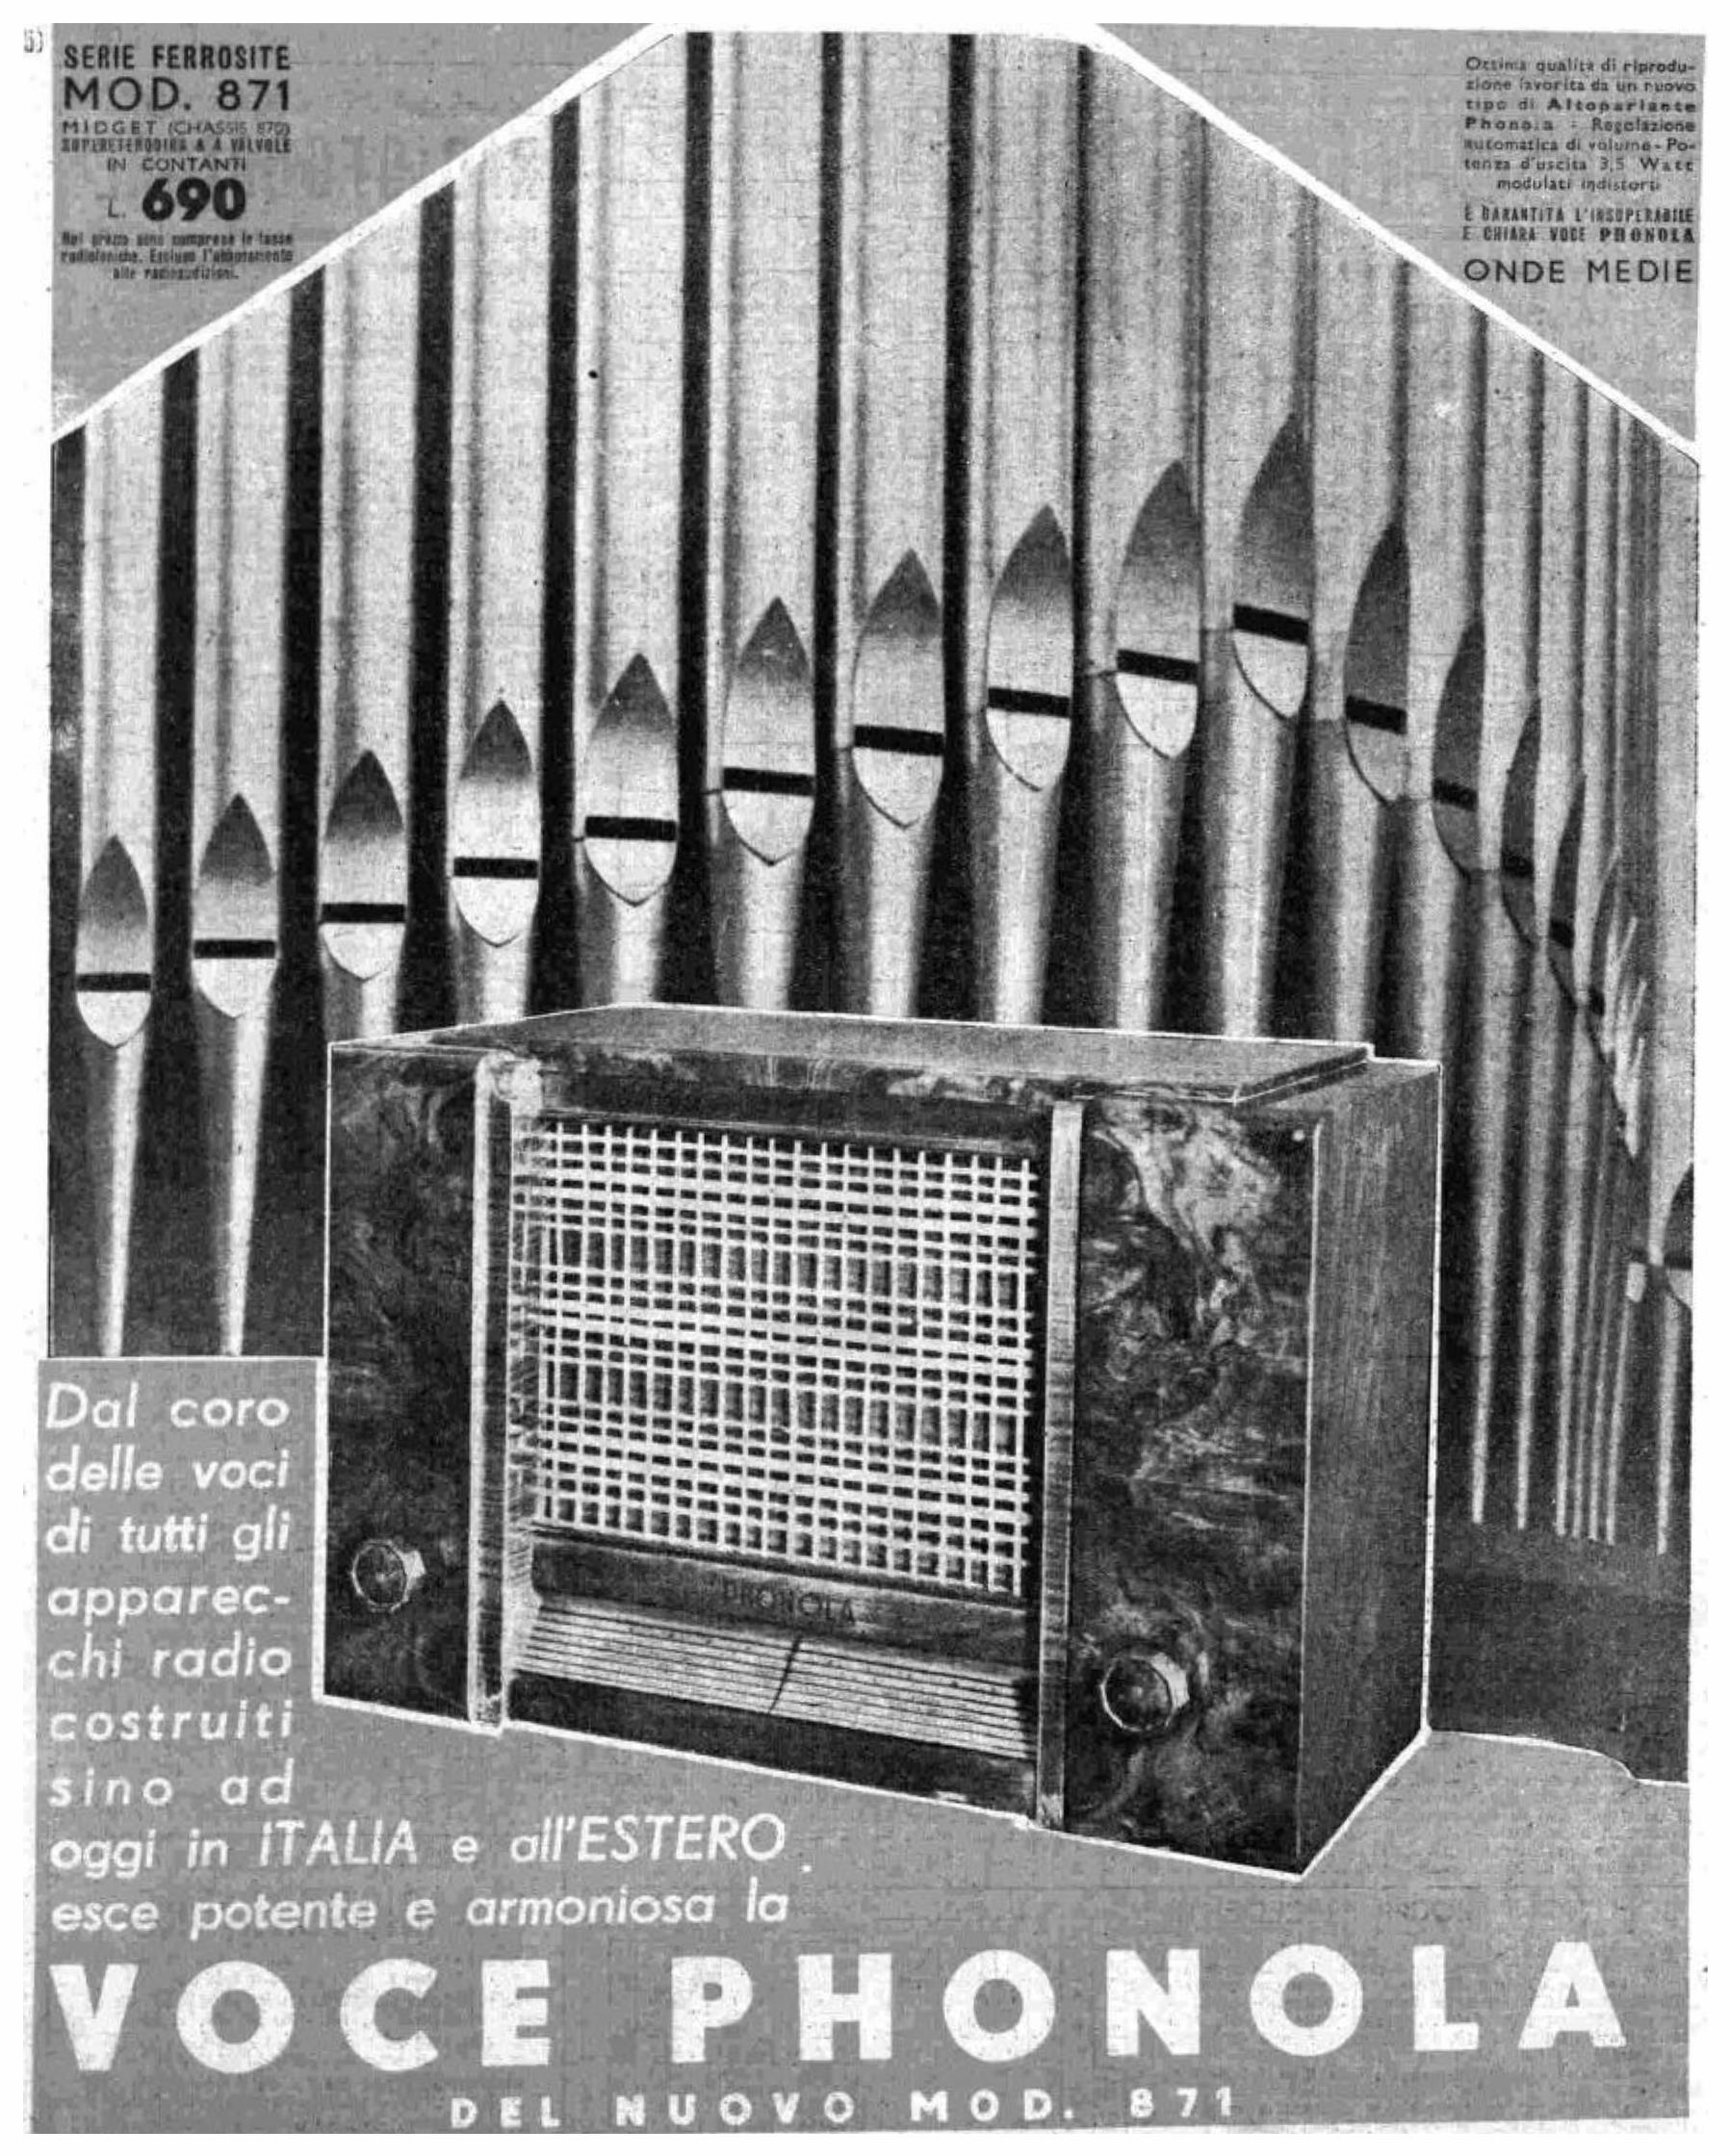 Phonola 1936 2.jpg